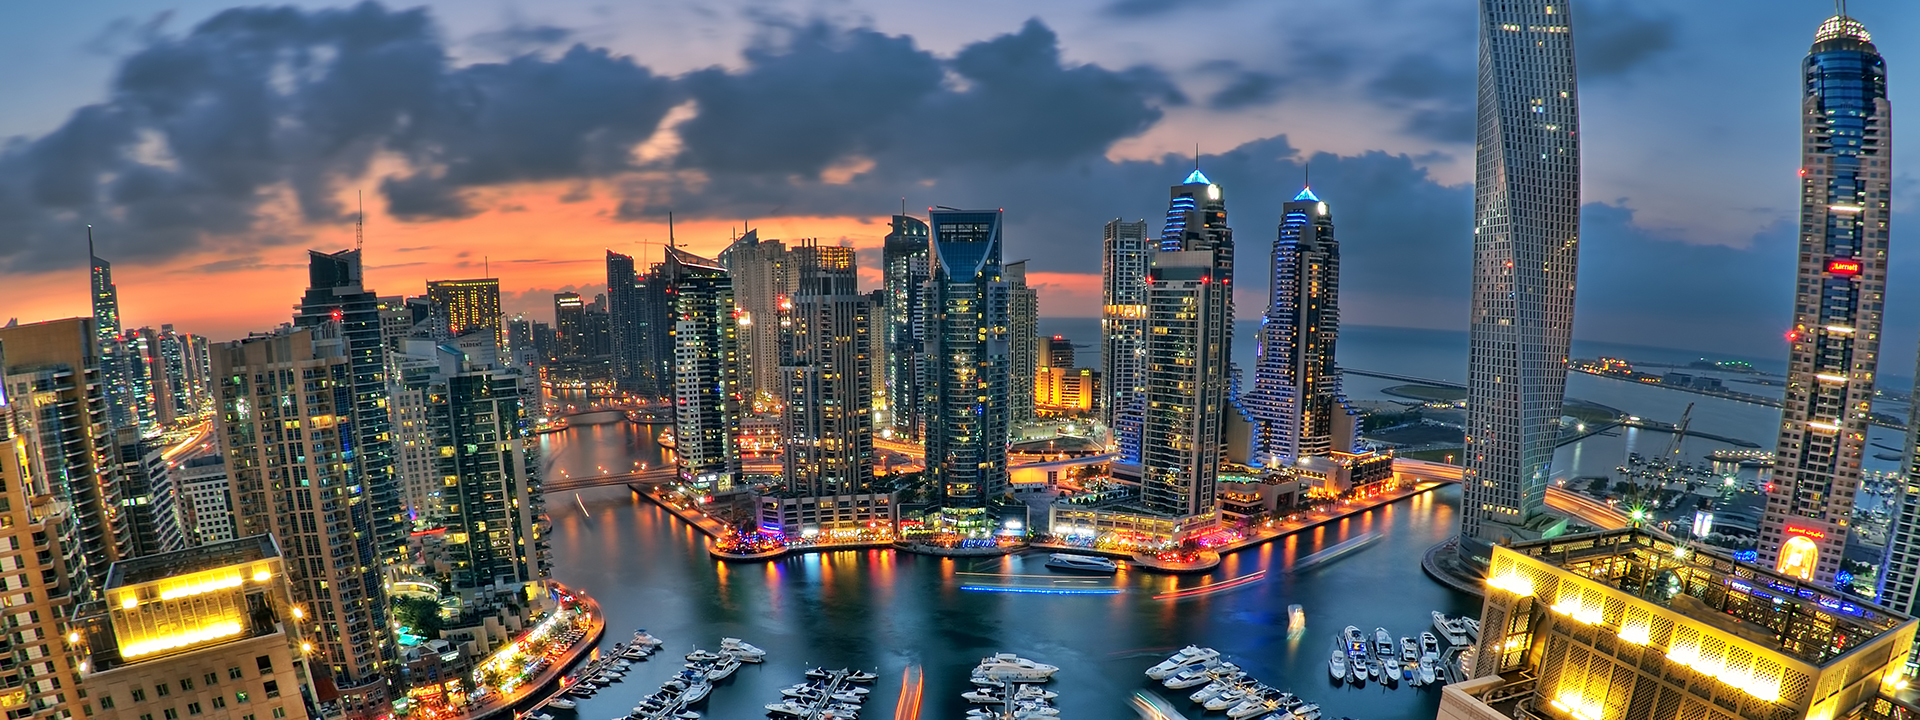 Global Touch - Dubai's Marina